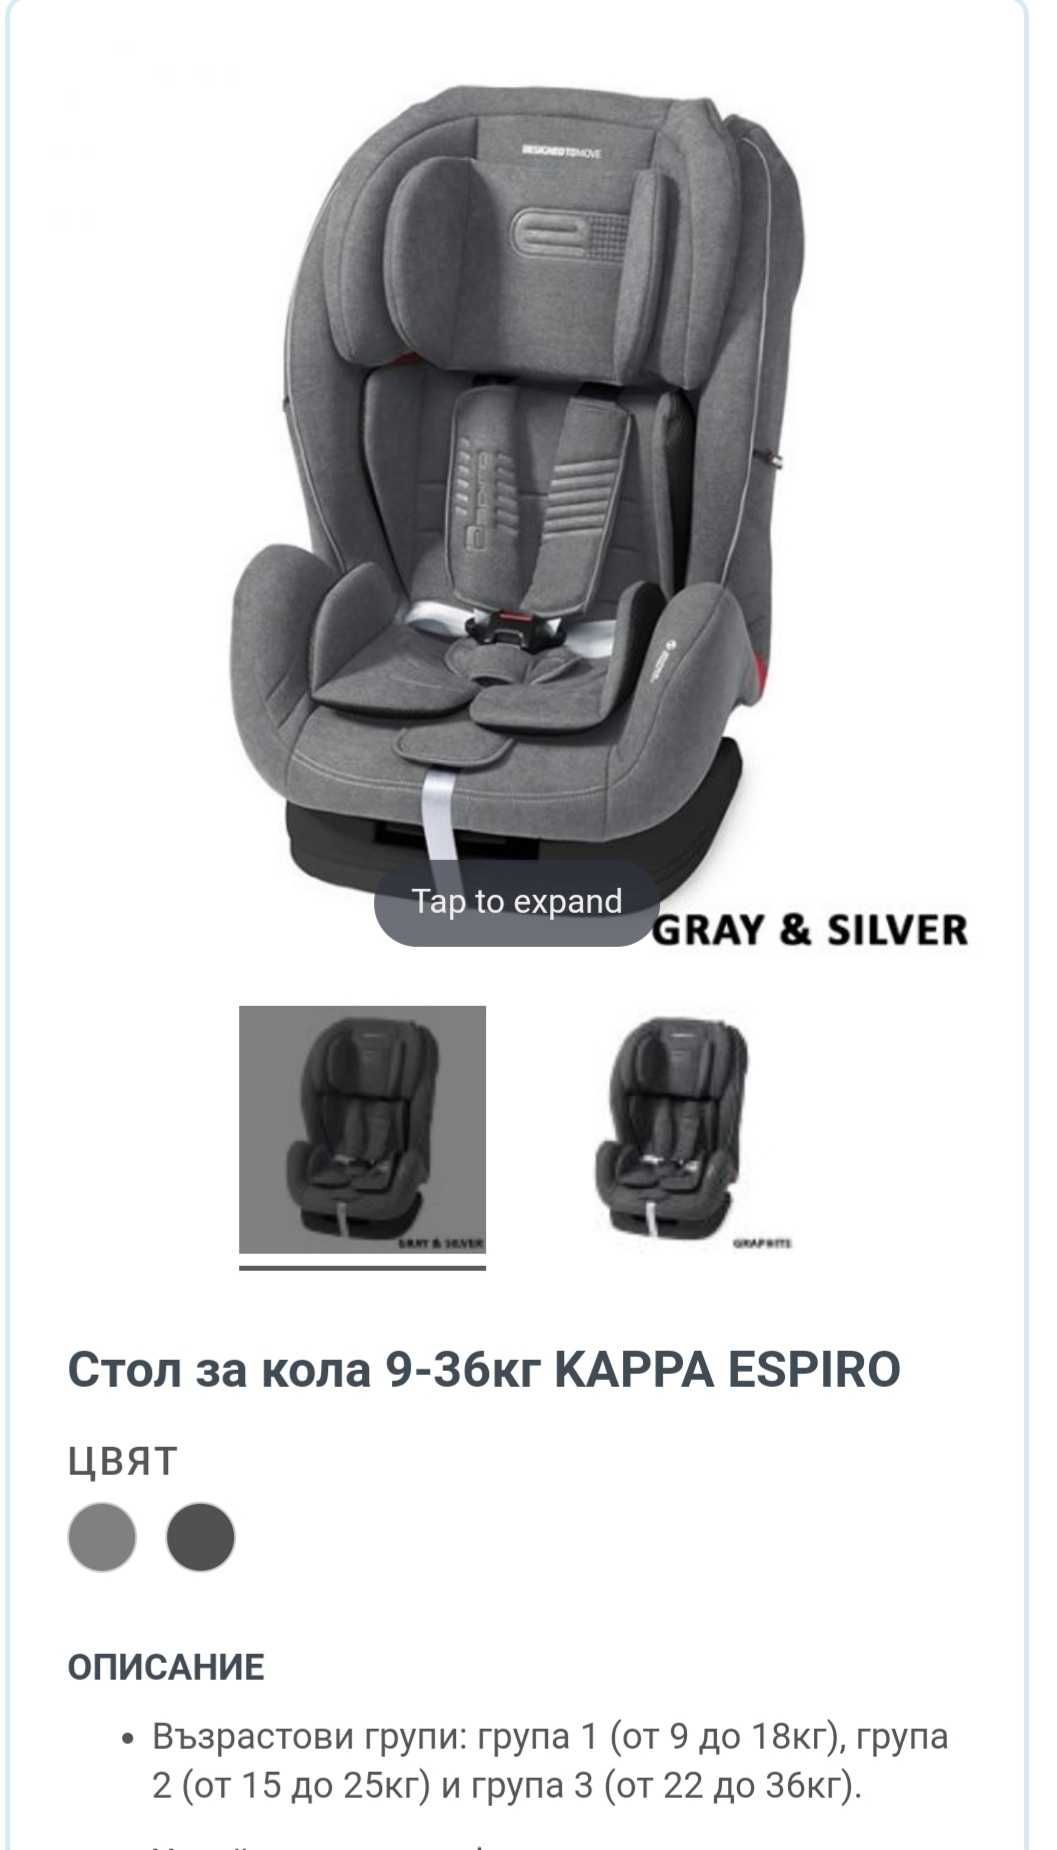 Стол за кола Espiro Kappa 9-36 кг